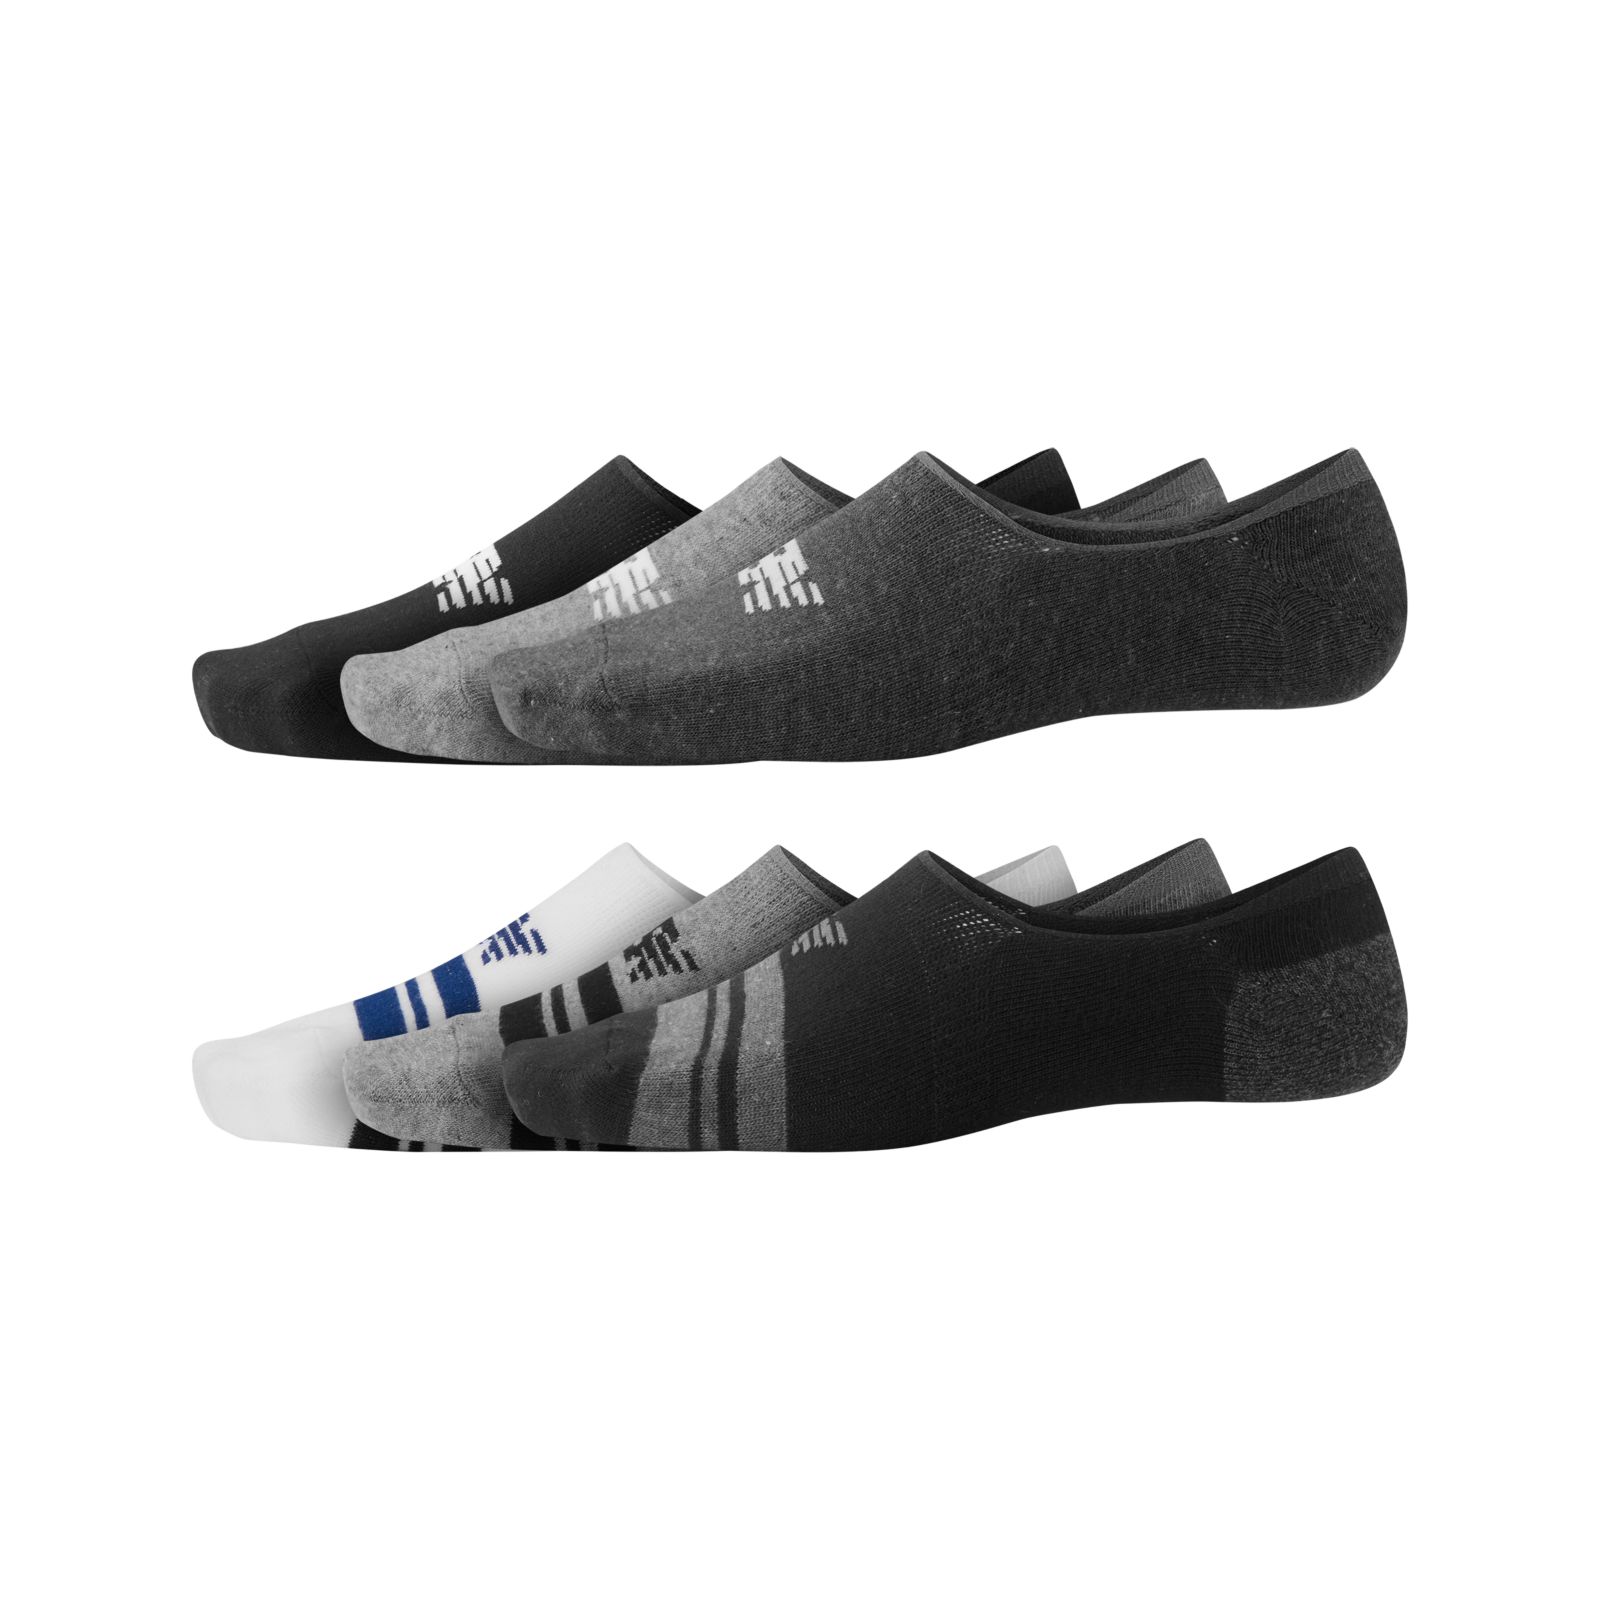 Adidas Custom: Buy now your favourite!